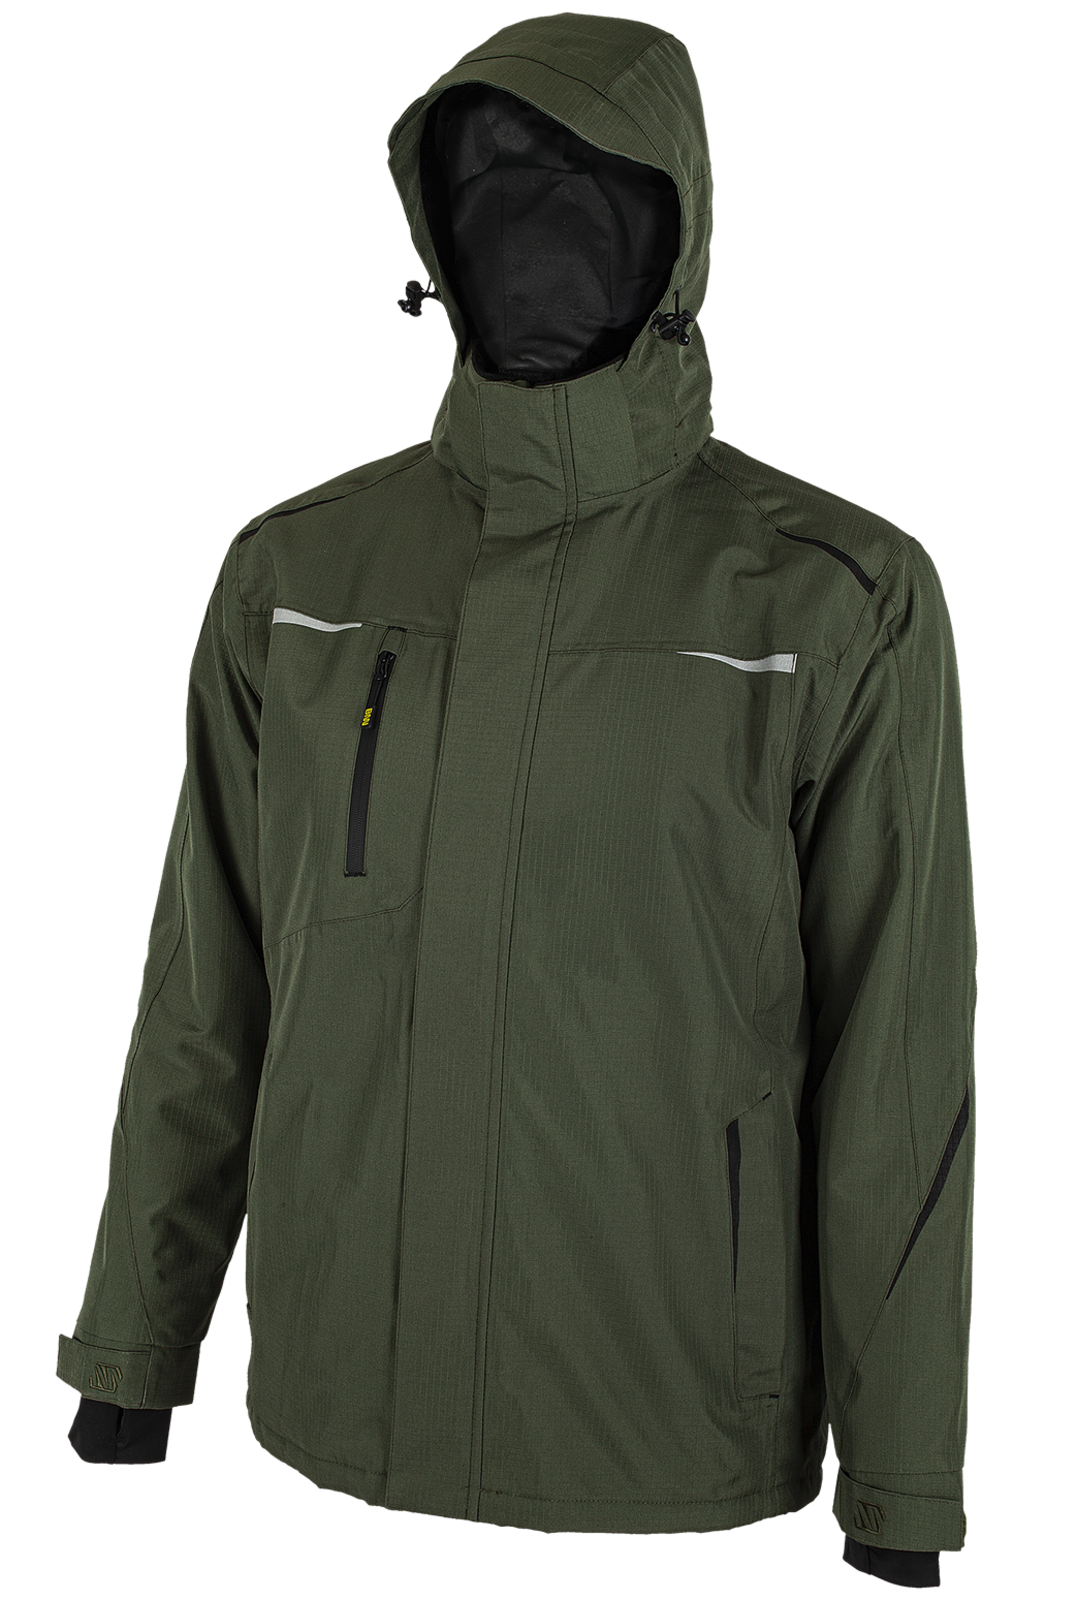 Zimná bunda Bennon Thoros - veľkosť: XL, farba: khaki